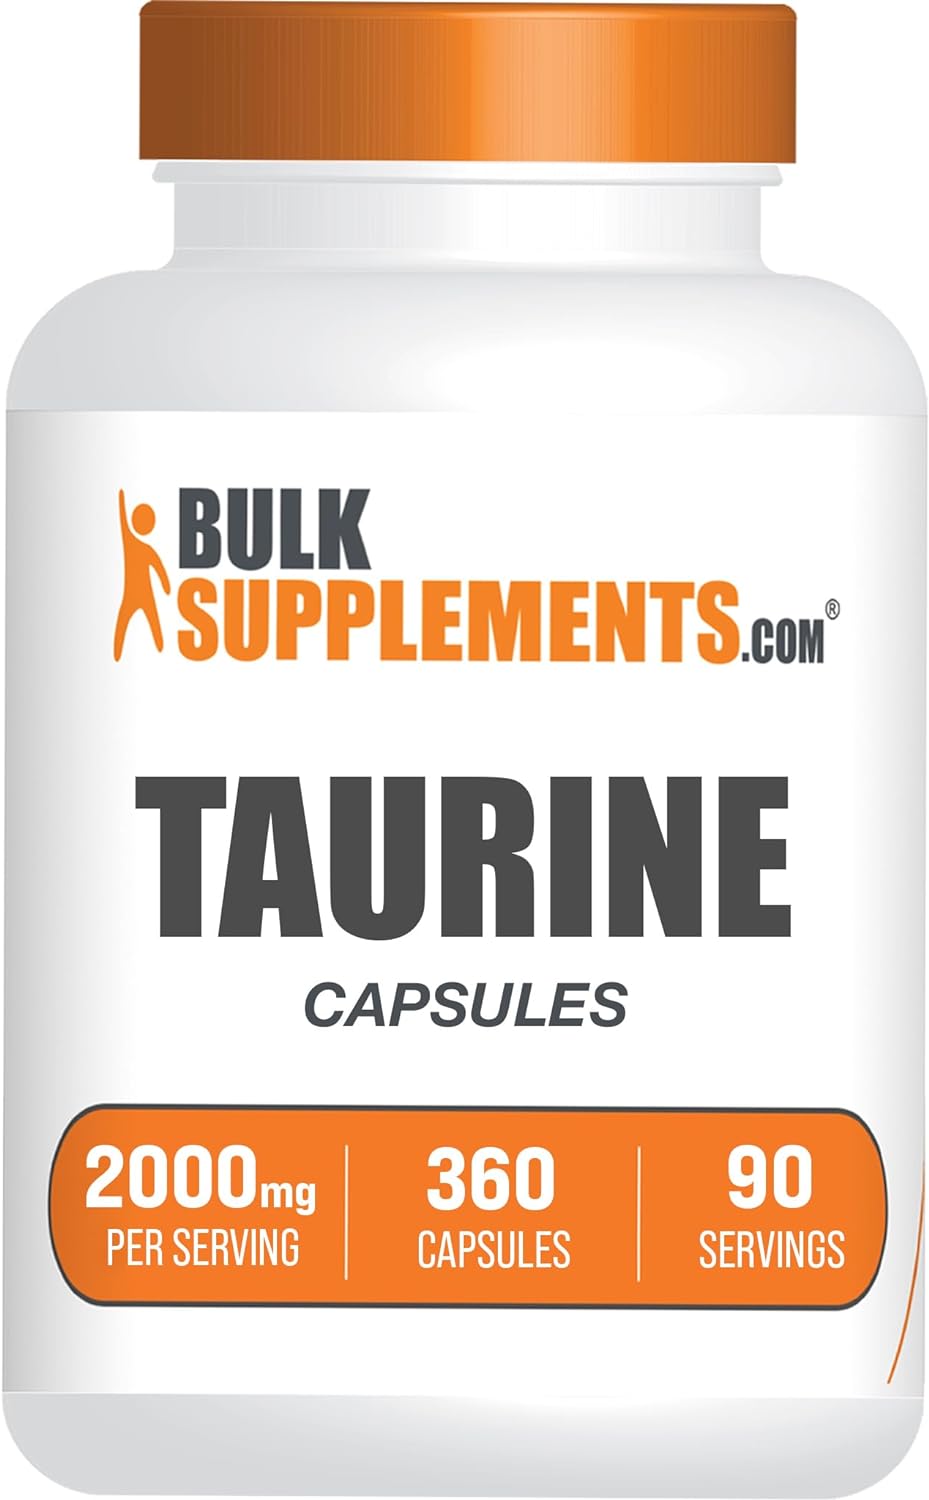 BULKSUPPLEMENTS.COM Taurine Capsules - Taurine Supplement, Taurine 200